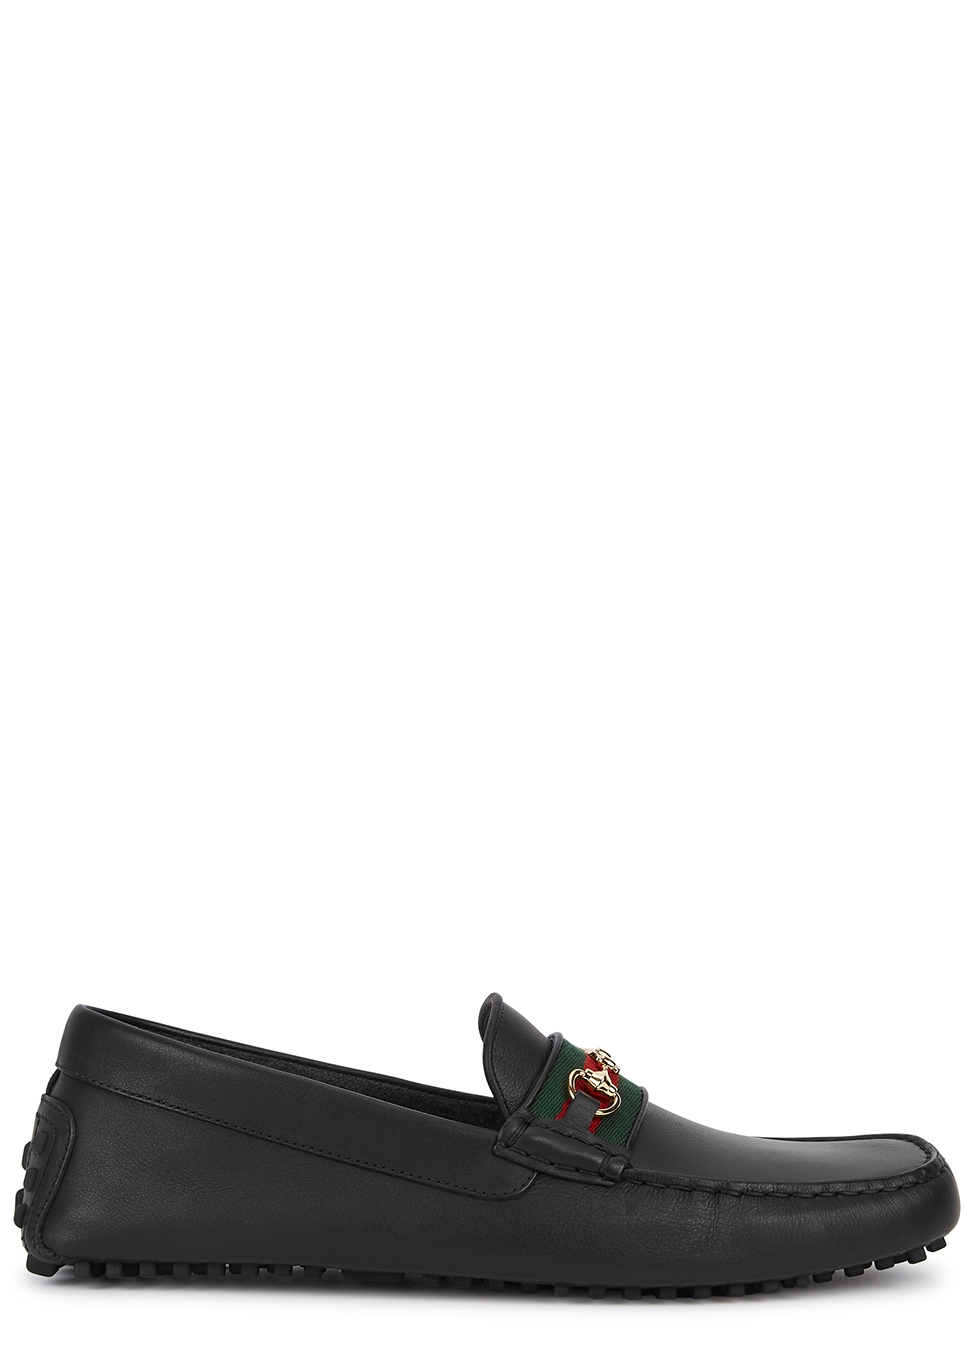 Gucci Ayrton black leather driving shoes - Harvey Nichols